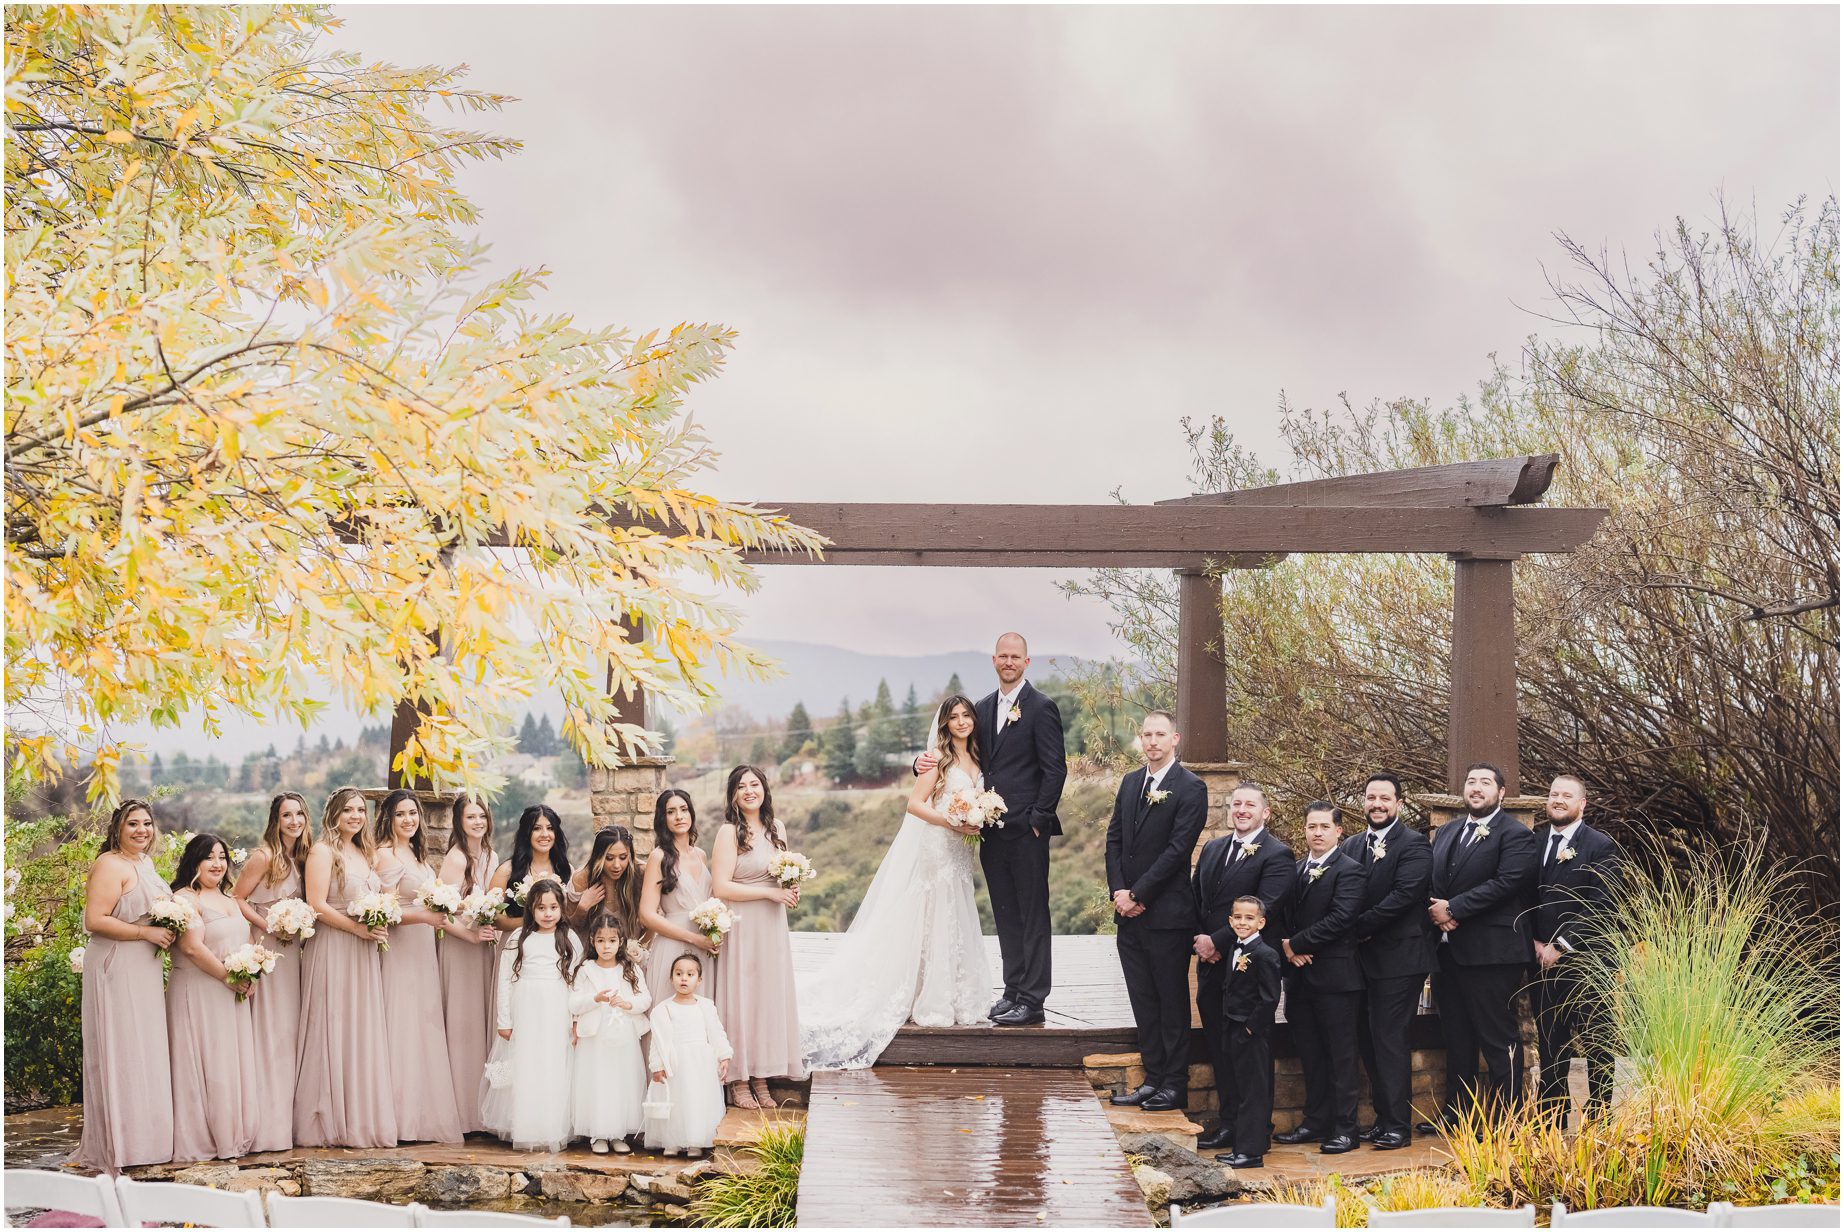 A full bridal party at Serendipity Garden Weddings, on a rainy wedding day